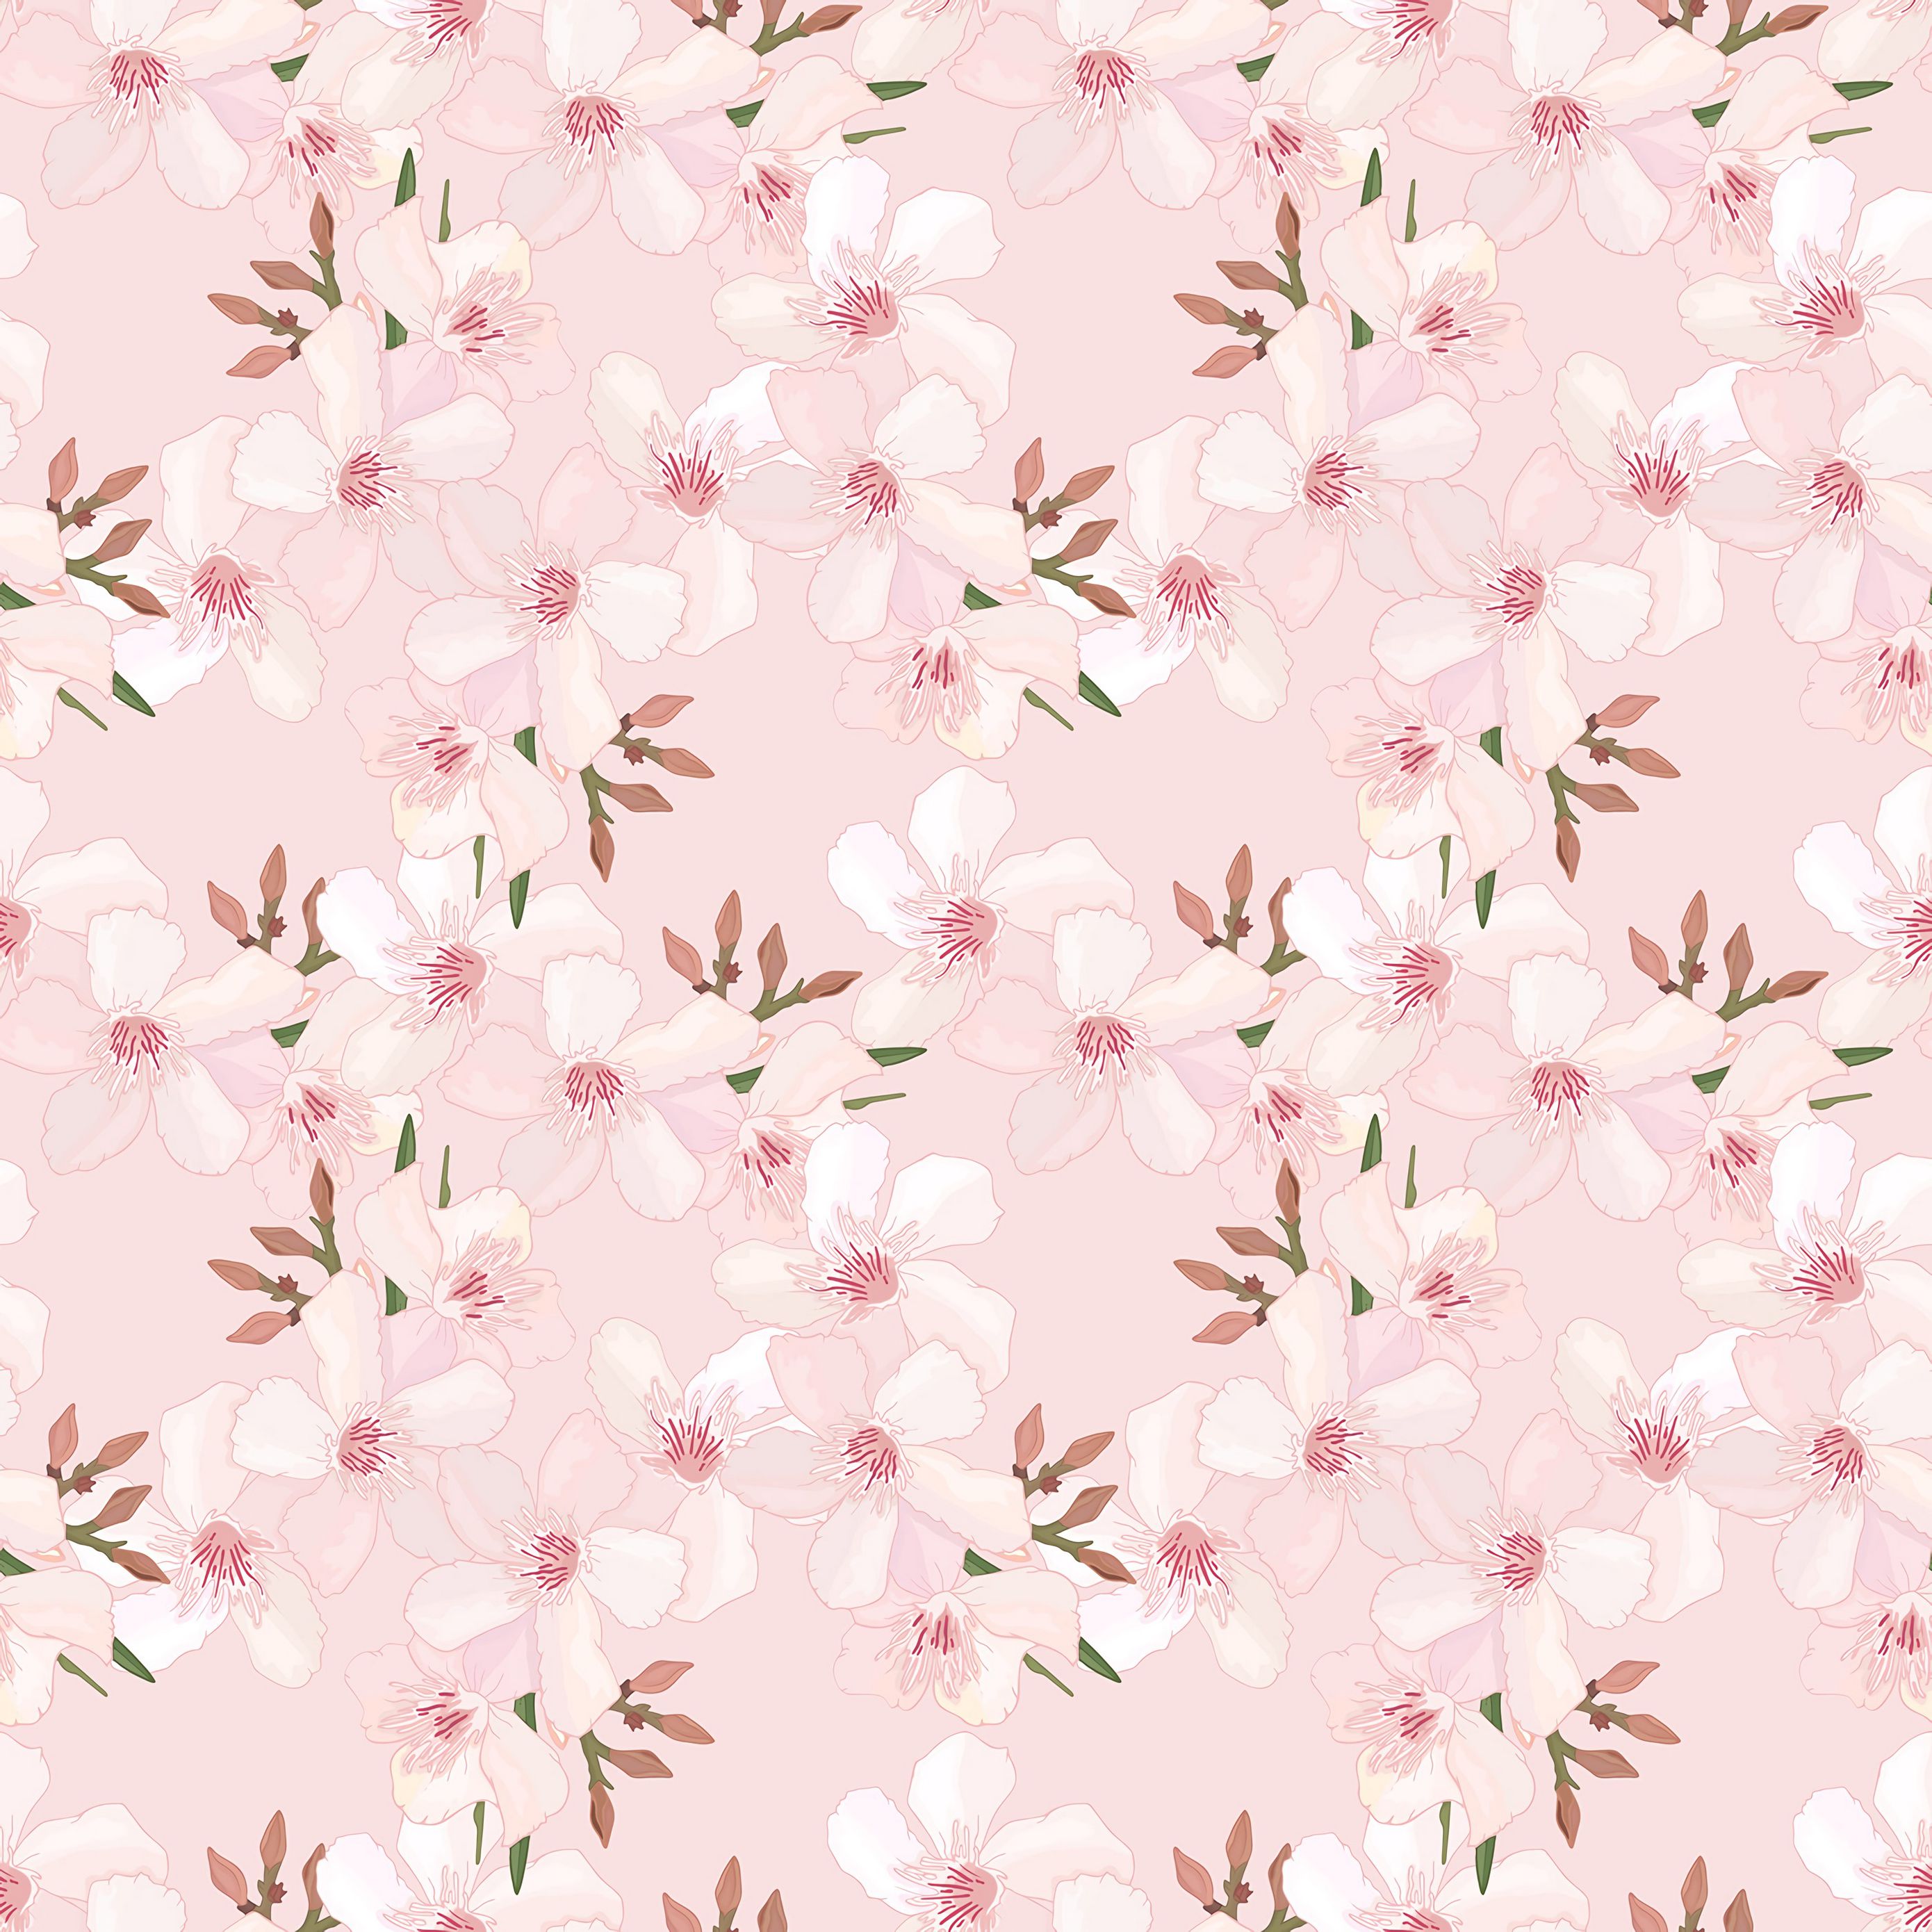 Download wallpaper 2780x2780 flowers, sakura, pattern, cherry, pink, tender, spring ipad air, ipad air ipad ipad ipad mini ipad mini ipad mini ipad pro 9.7 for parallax HD background